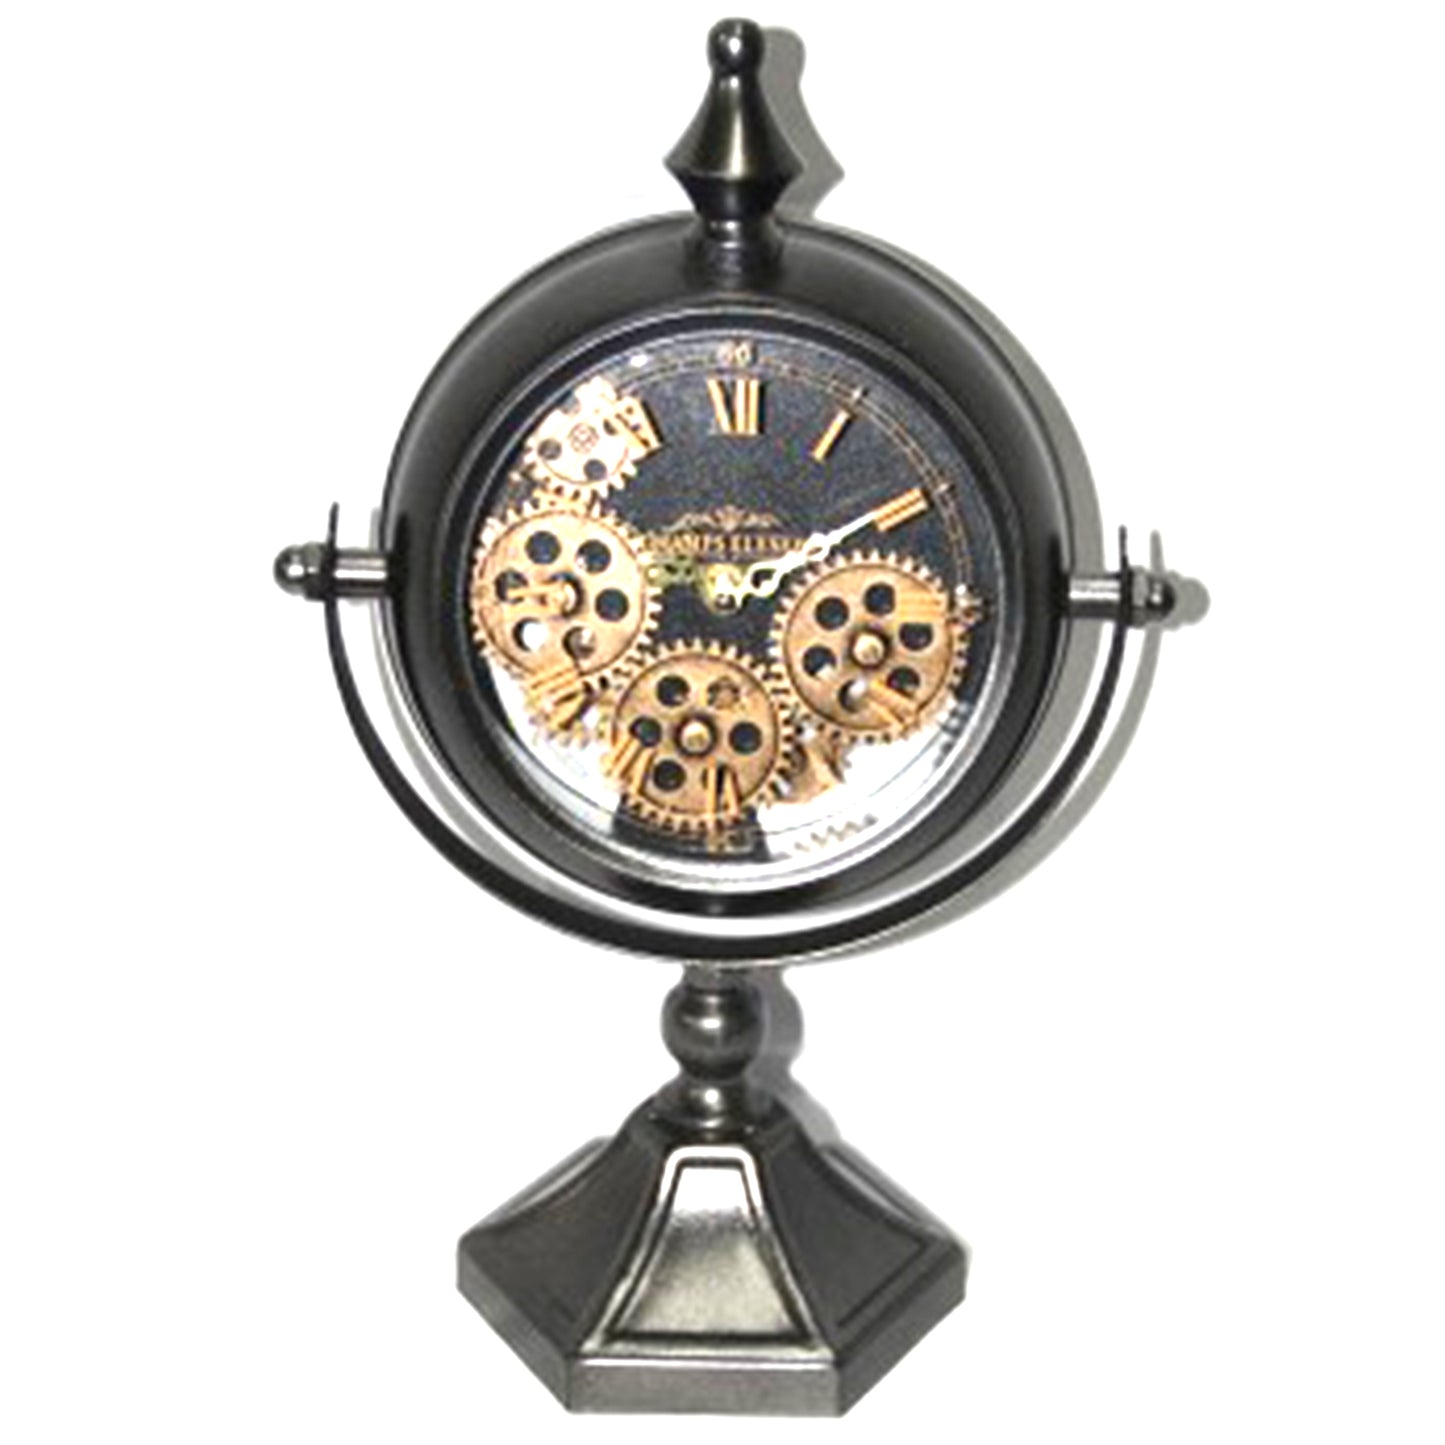 Free Standing Captain Cook's Mechanical Table Clock in Gun Metal Colour | Happy Piranha